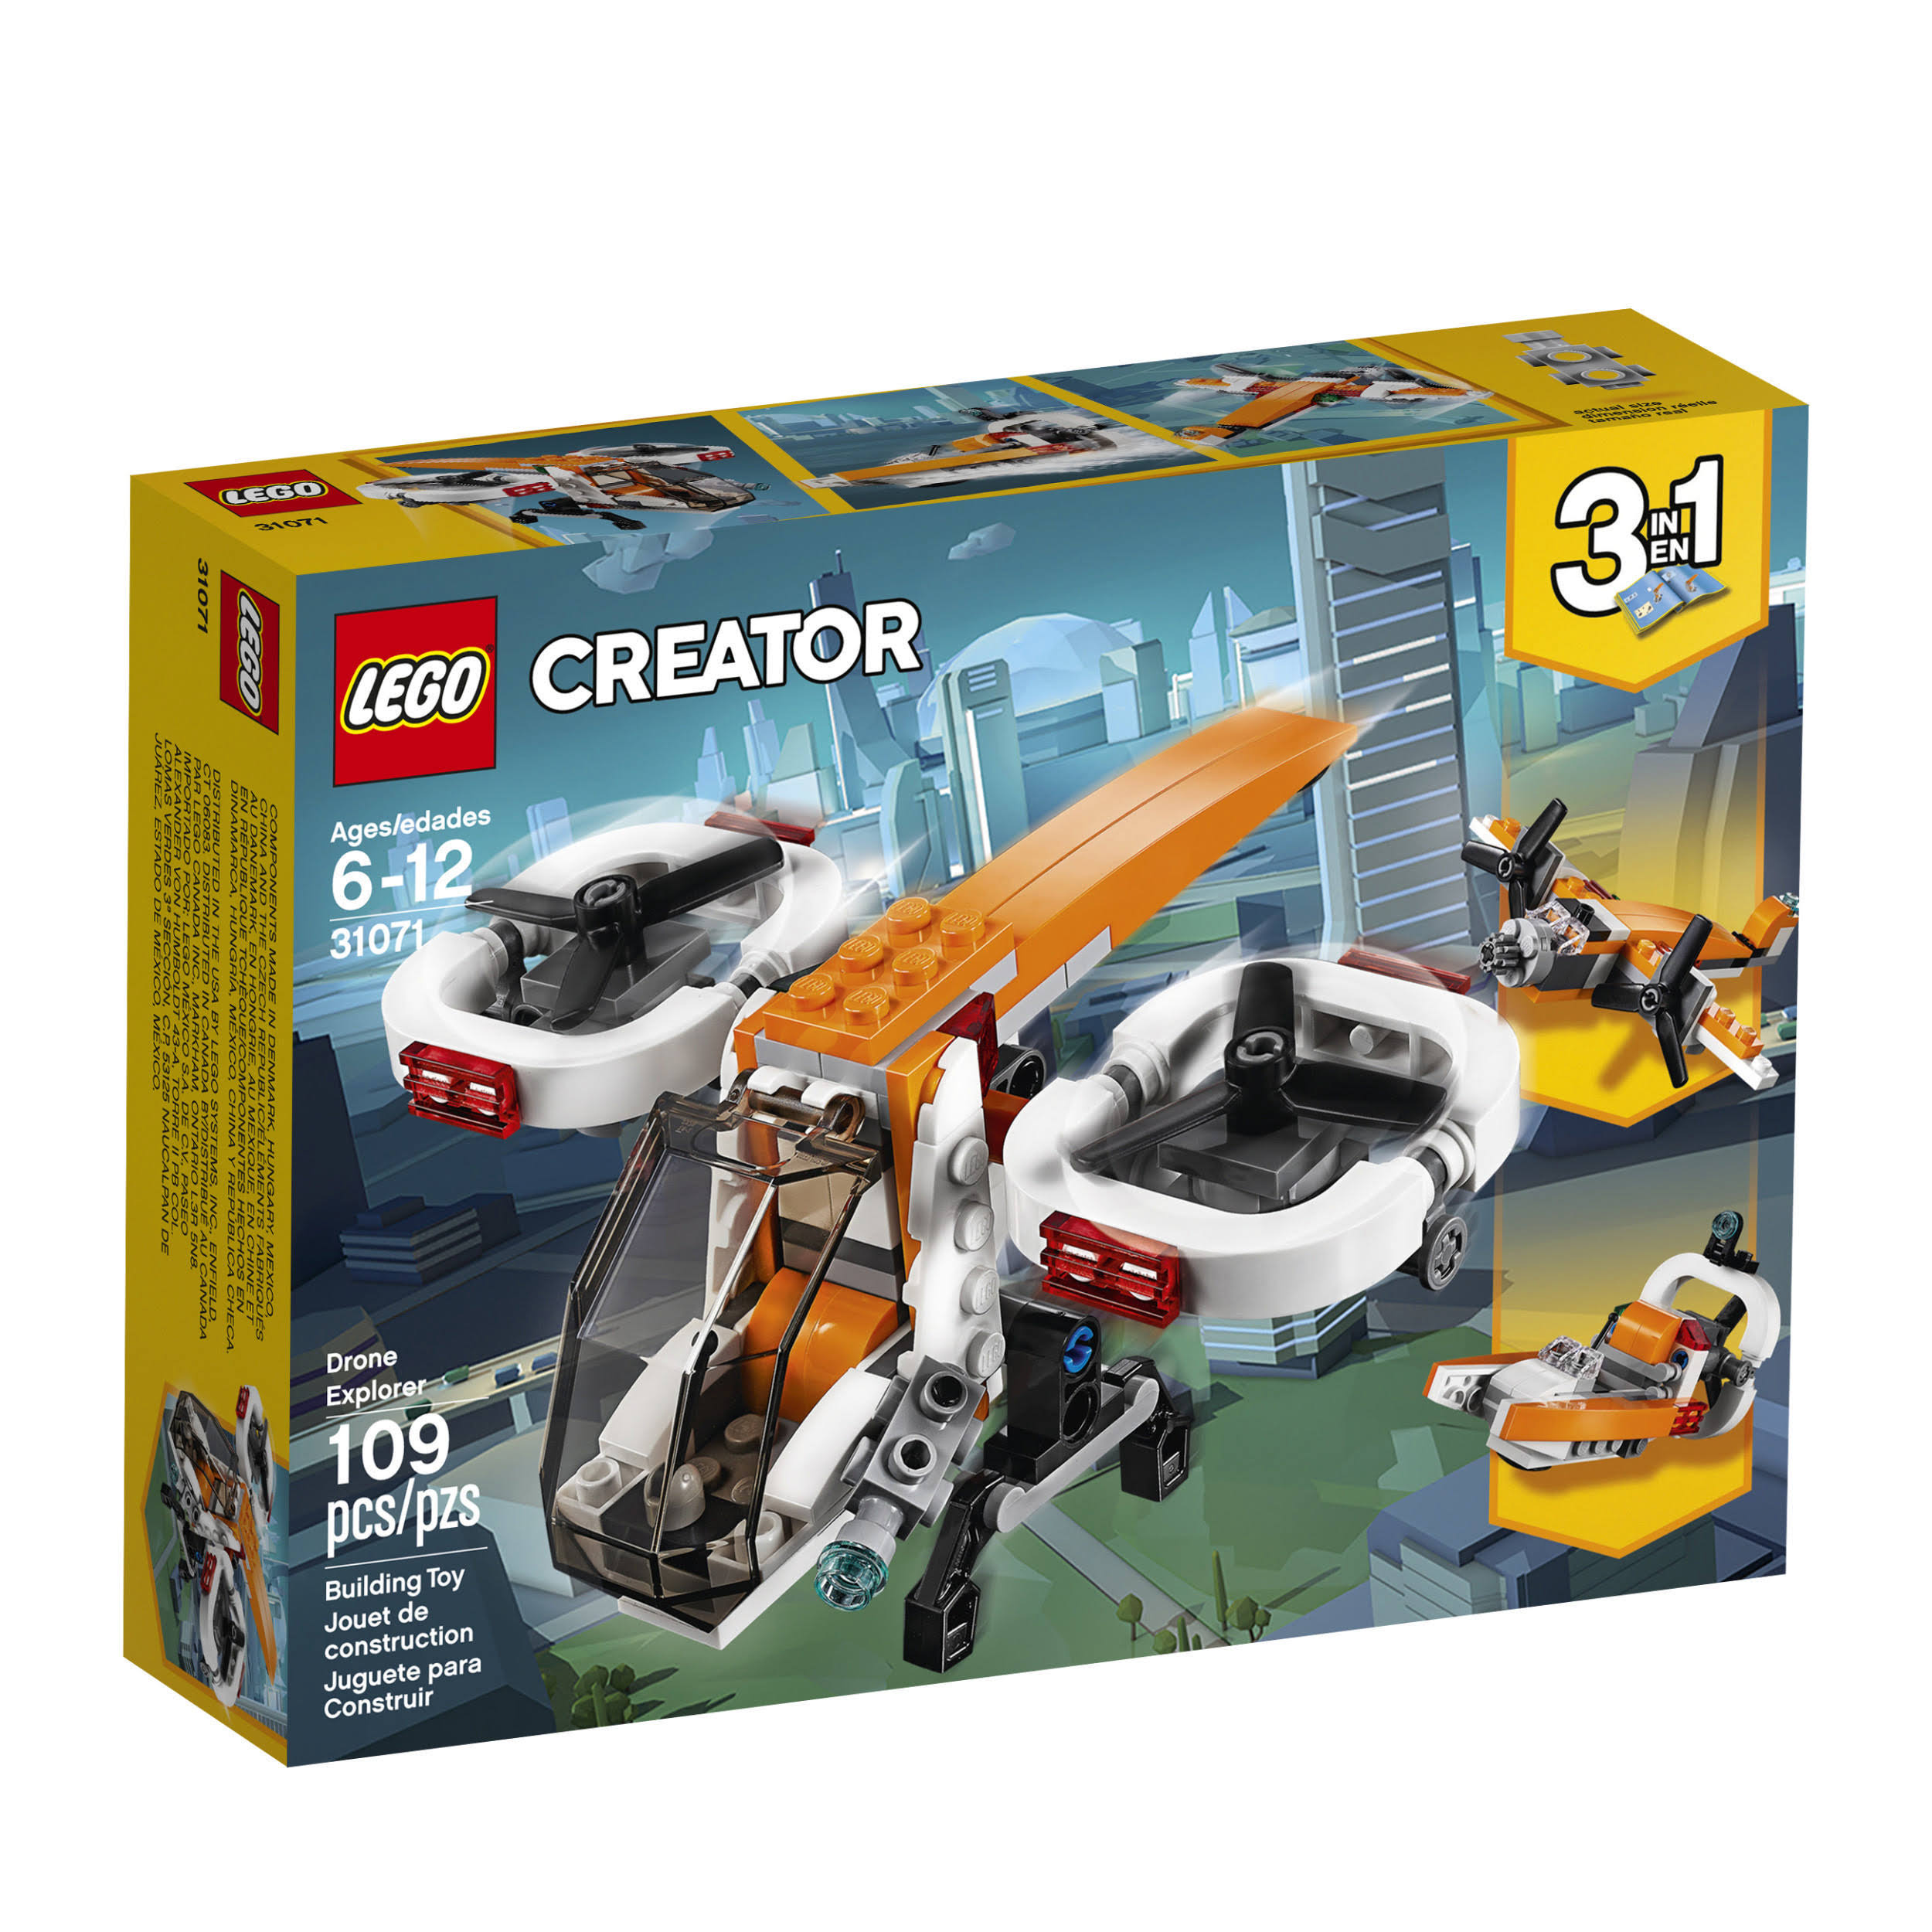 Lego Creator 31071 Drone Explorer - 109 Pieces